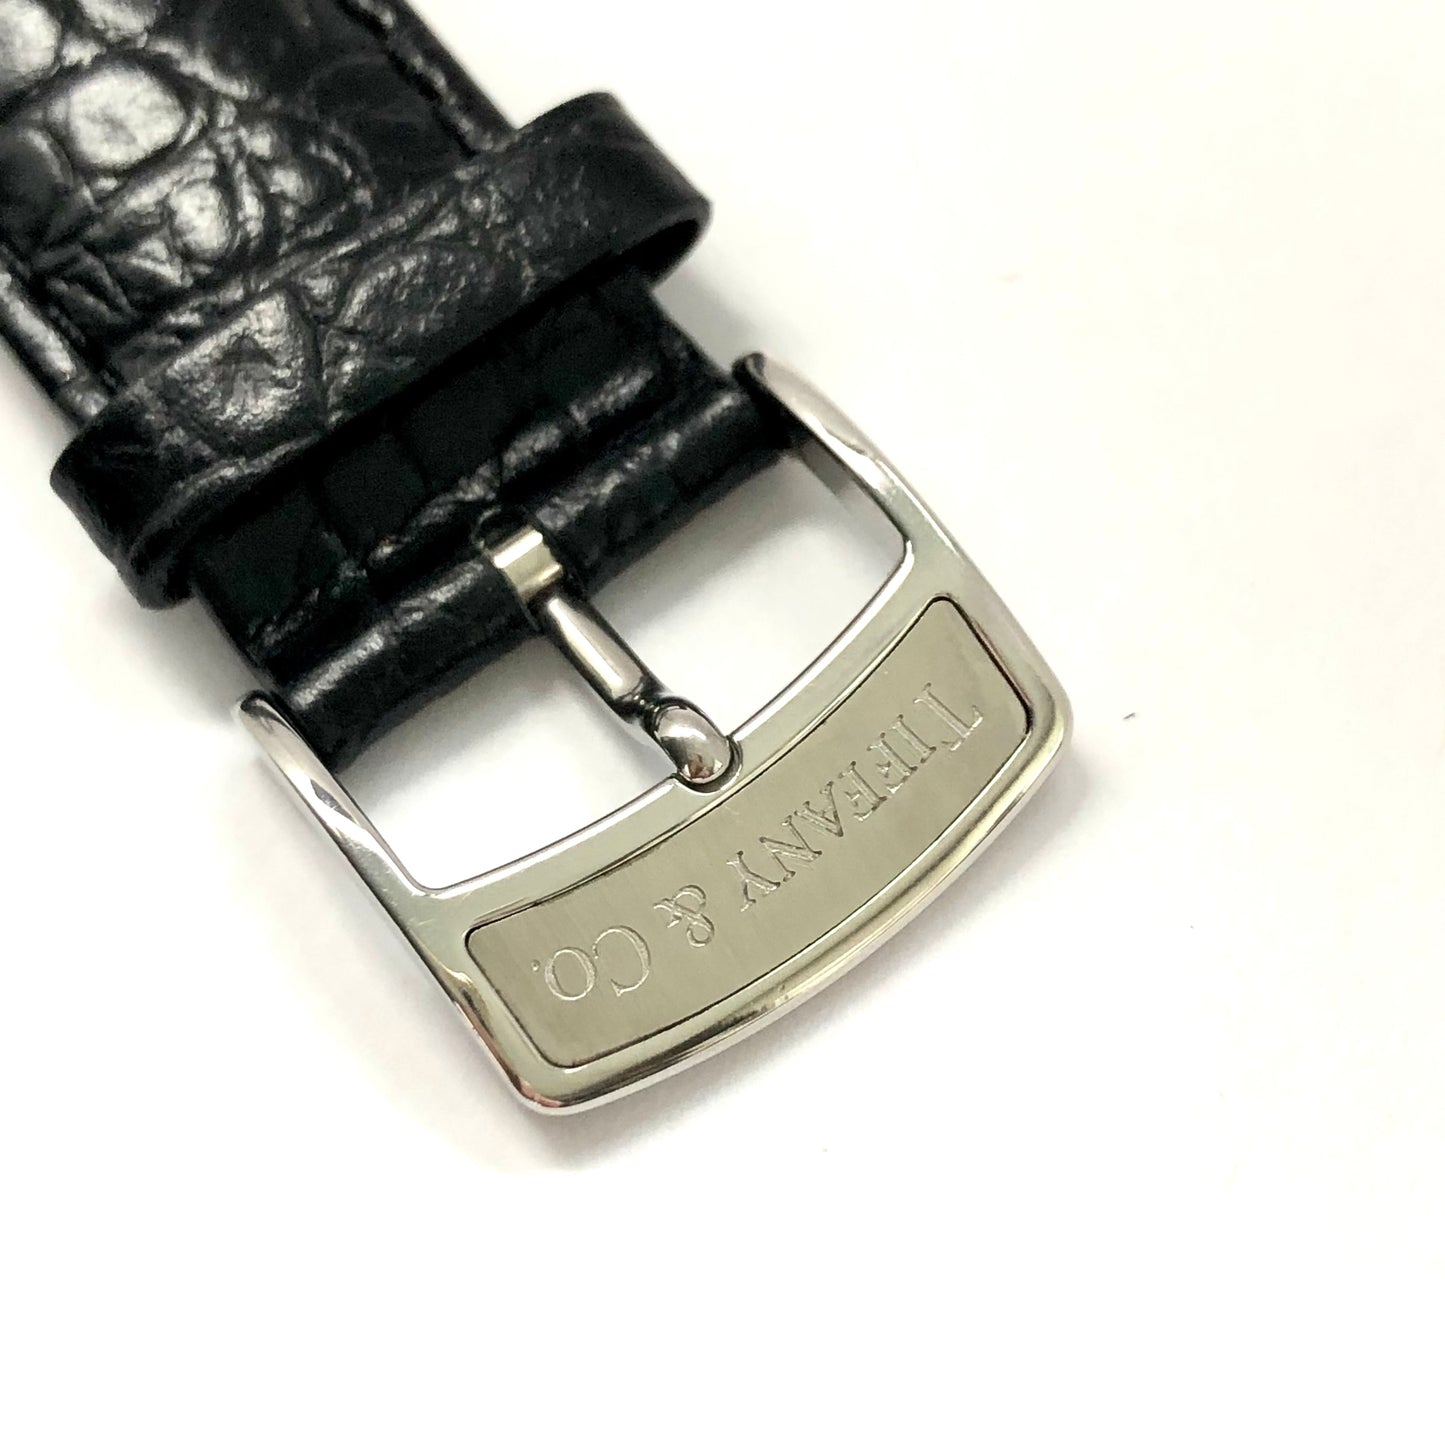 TIFFANY & Co. Chronograph 36mm Steel Diamond Watch